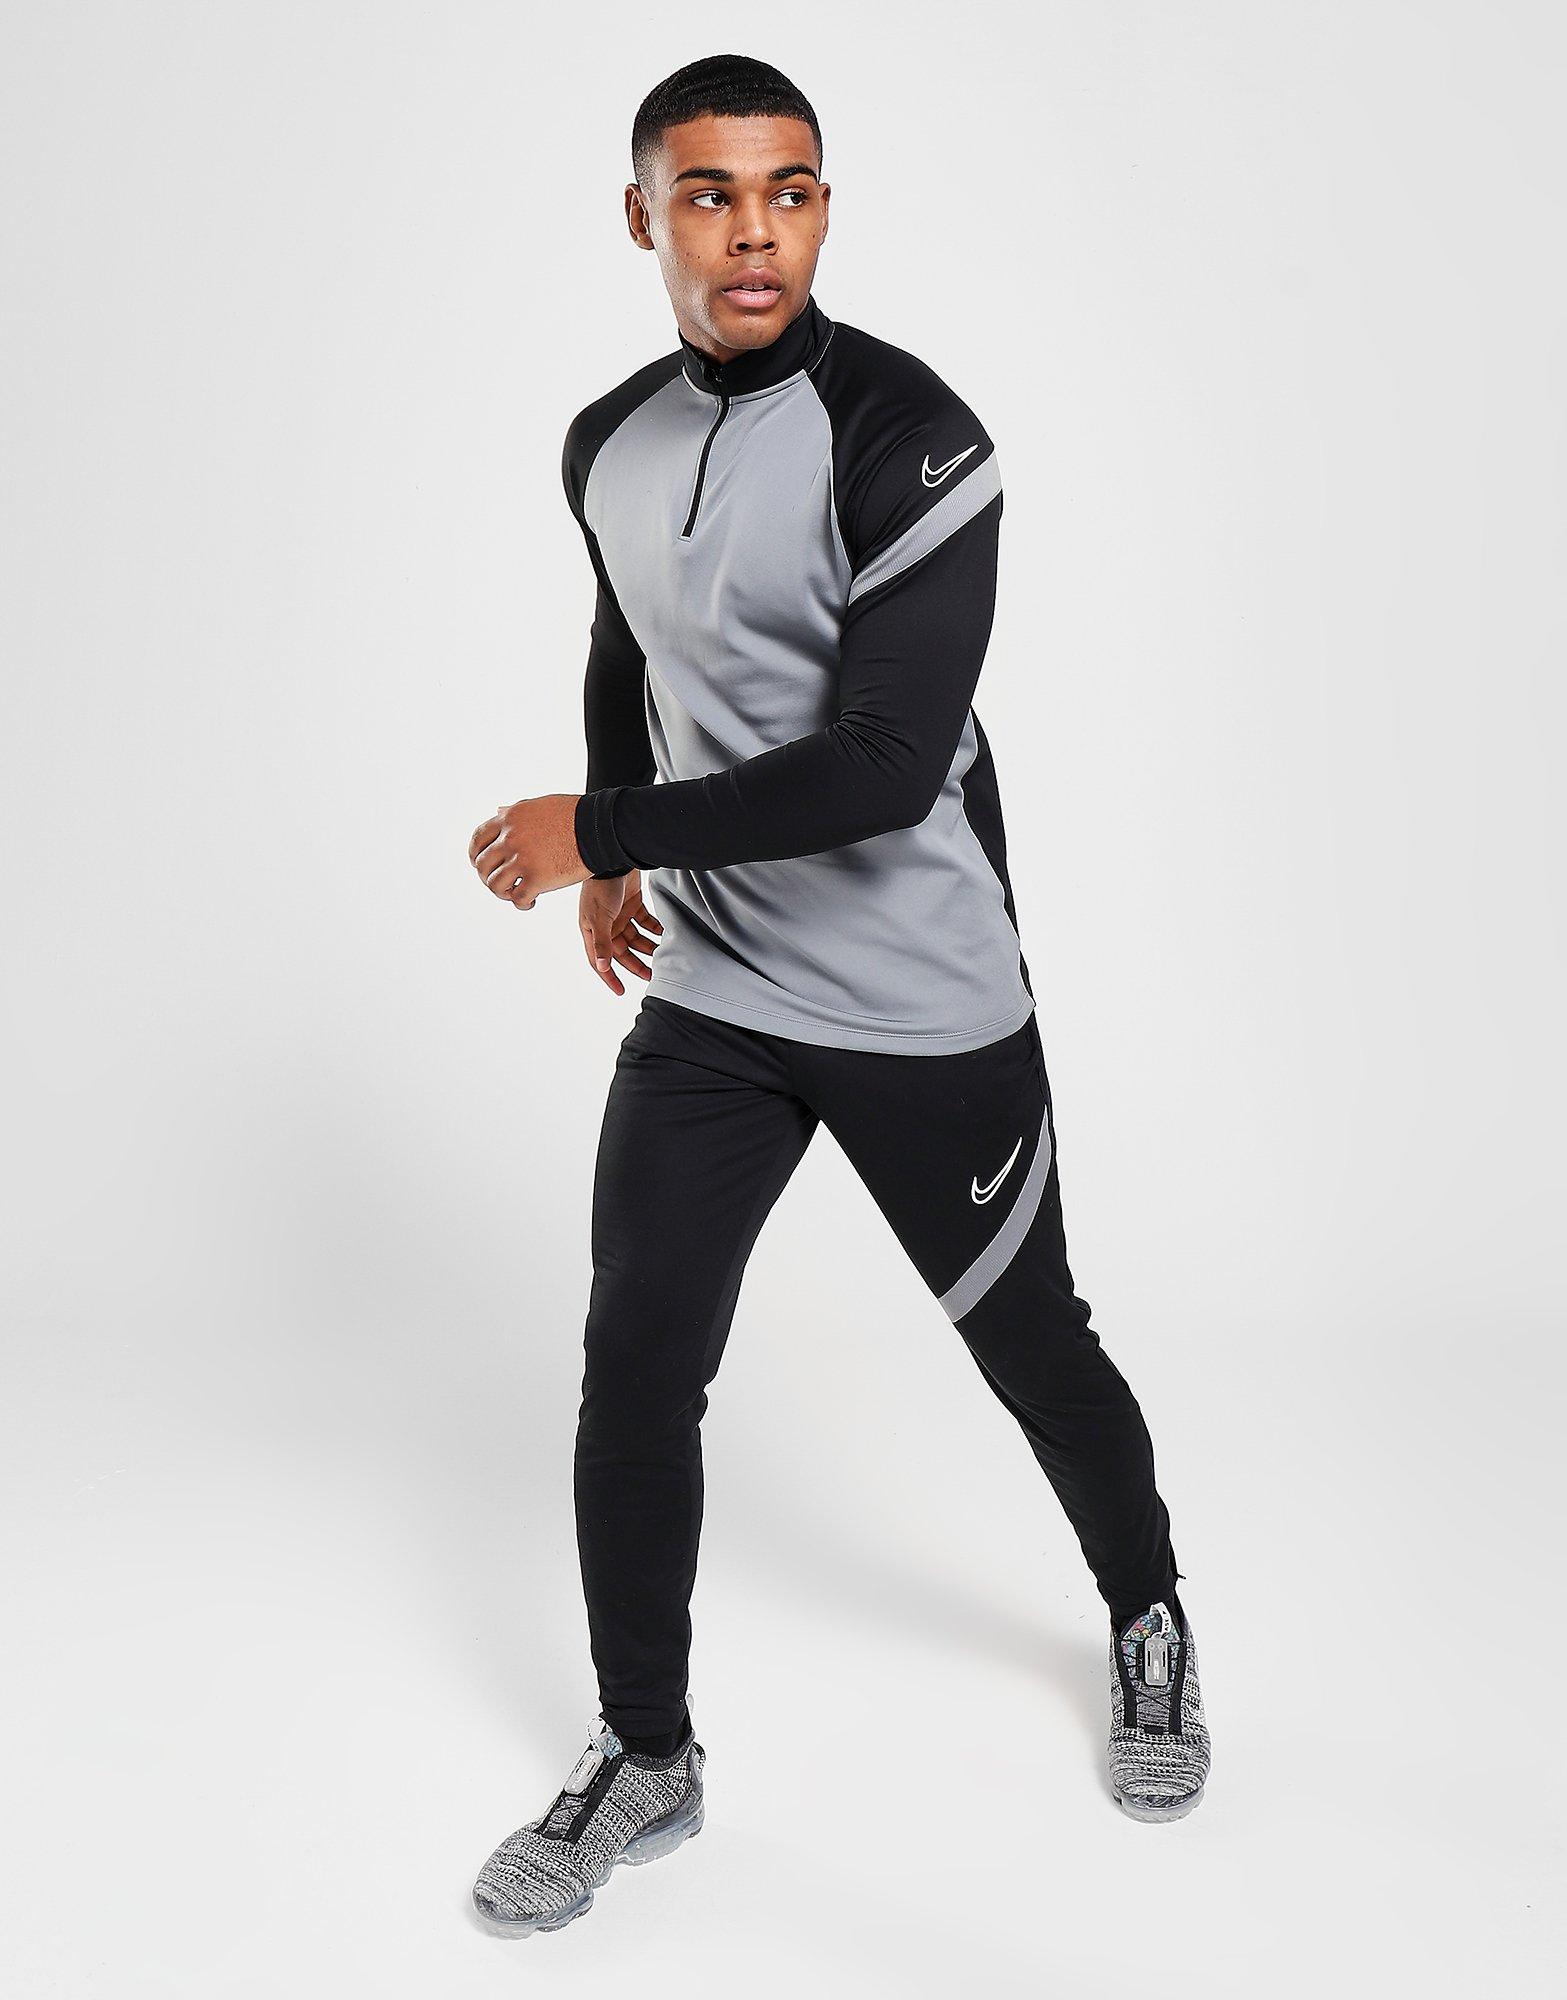 Nike Next Gen Academy Track Top Store 